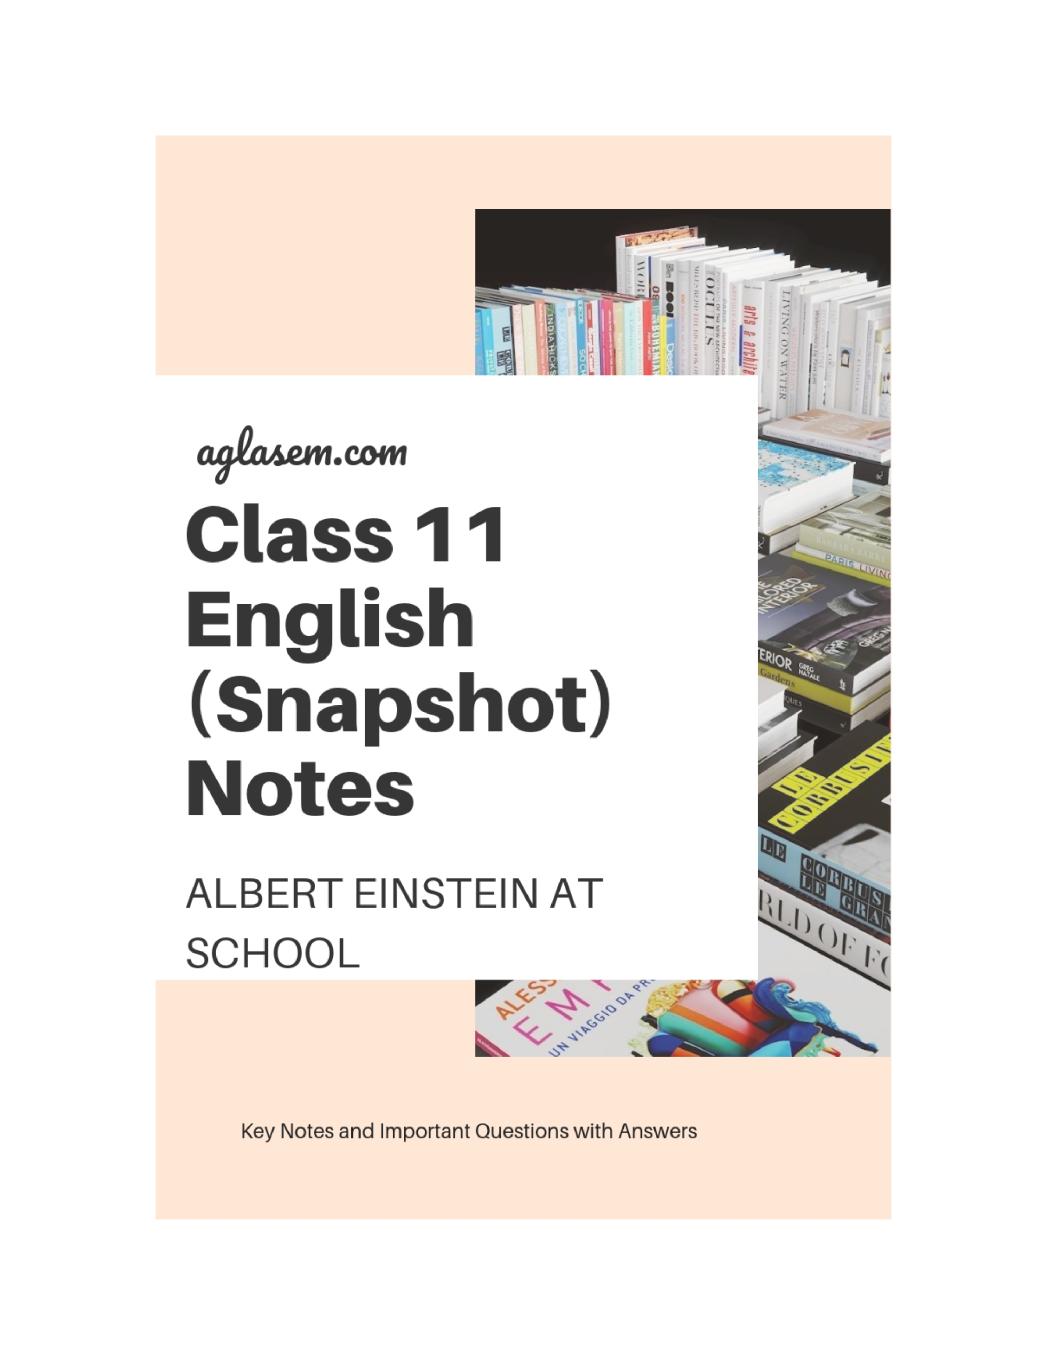 Class 11 English Snapshot Notes For Albert Einstein at School - Page 1